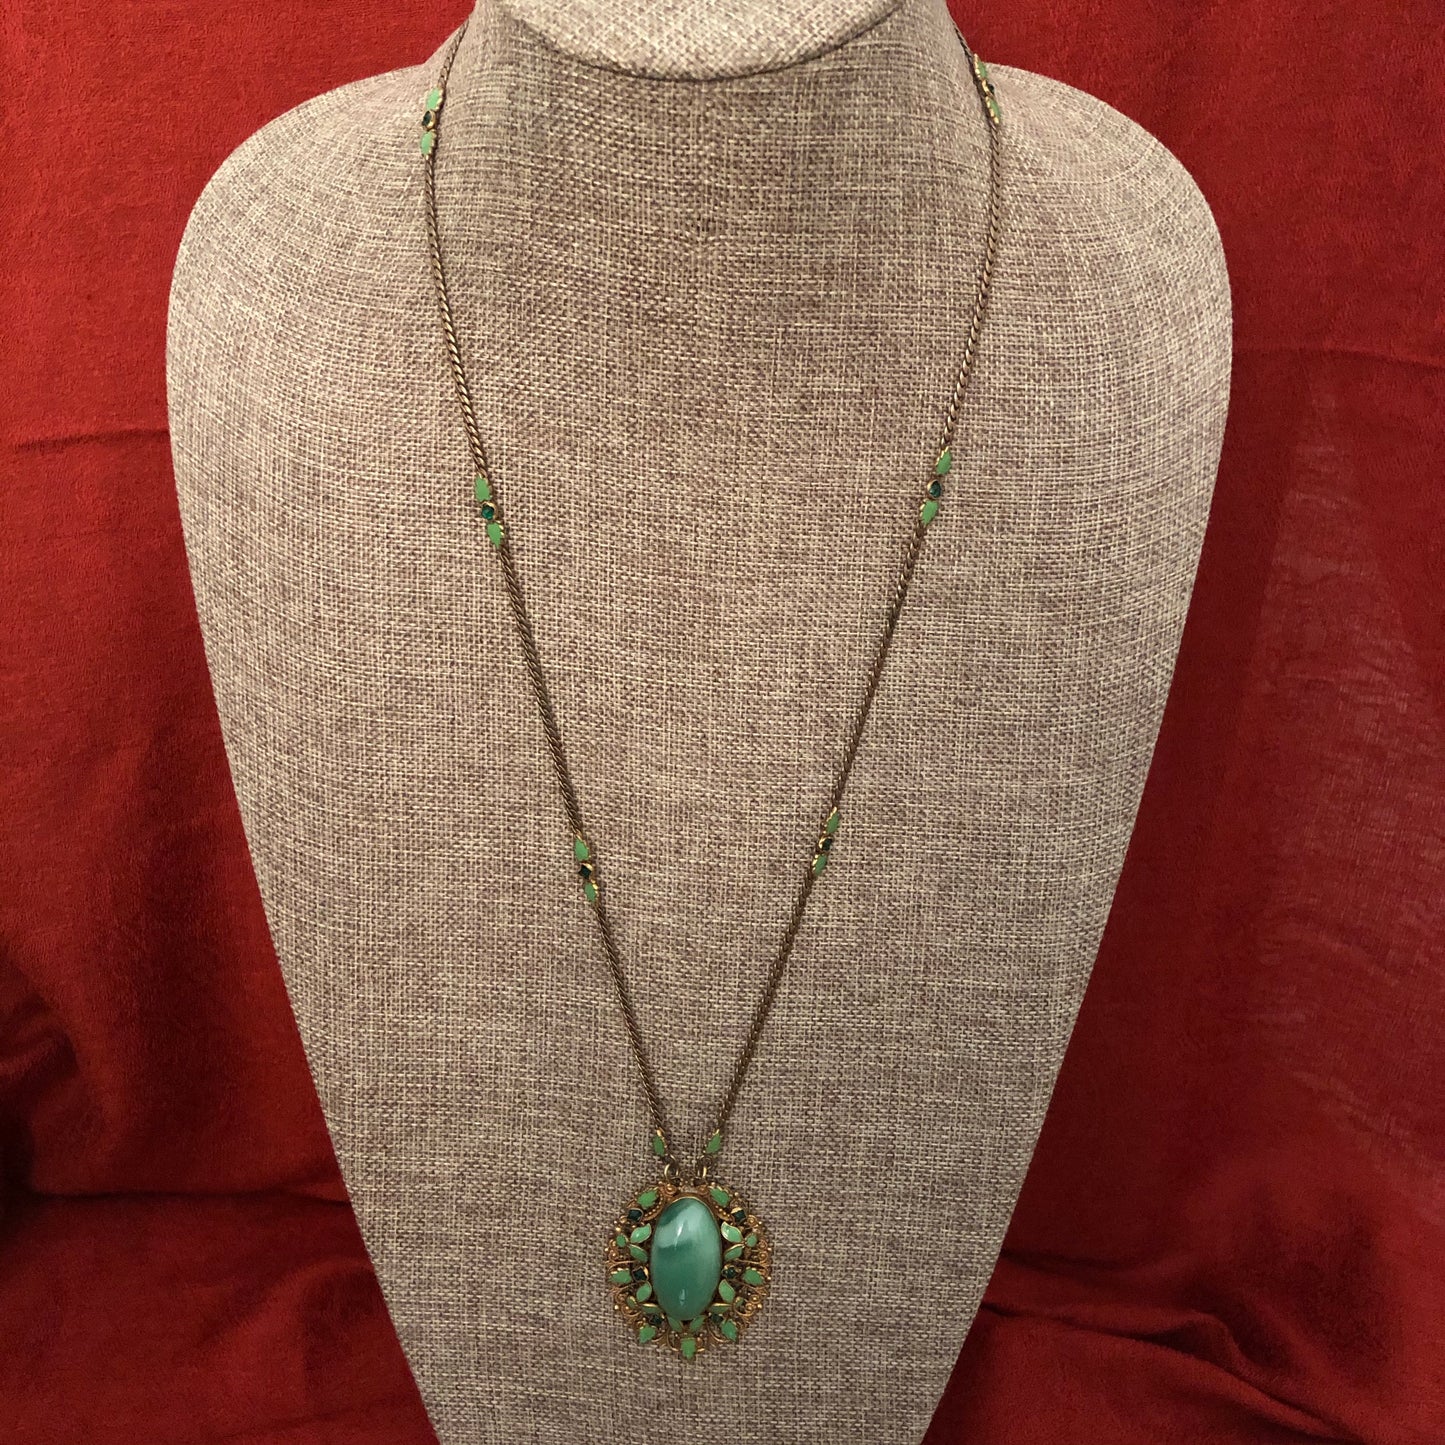 Vintage Inspired Enamel and Rhinestone Necklace